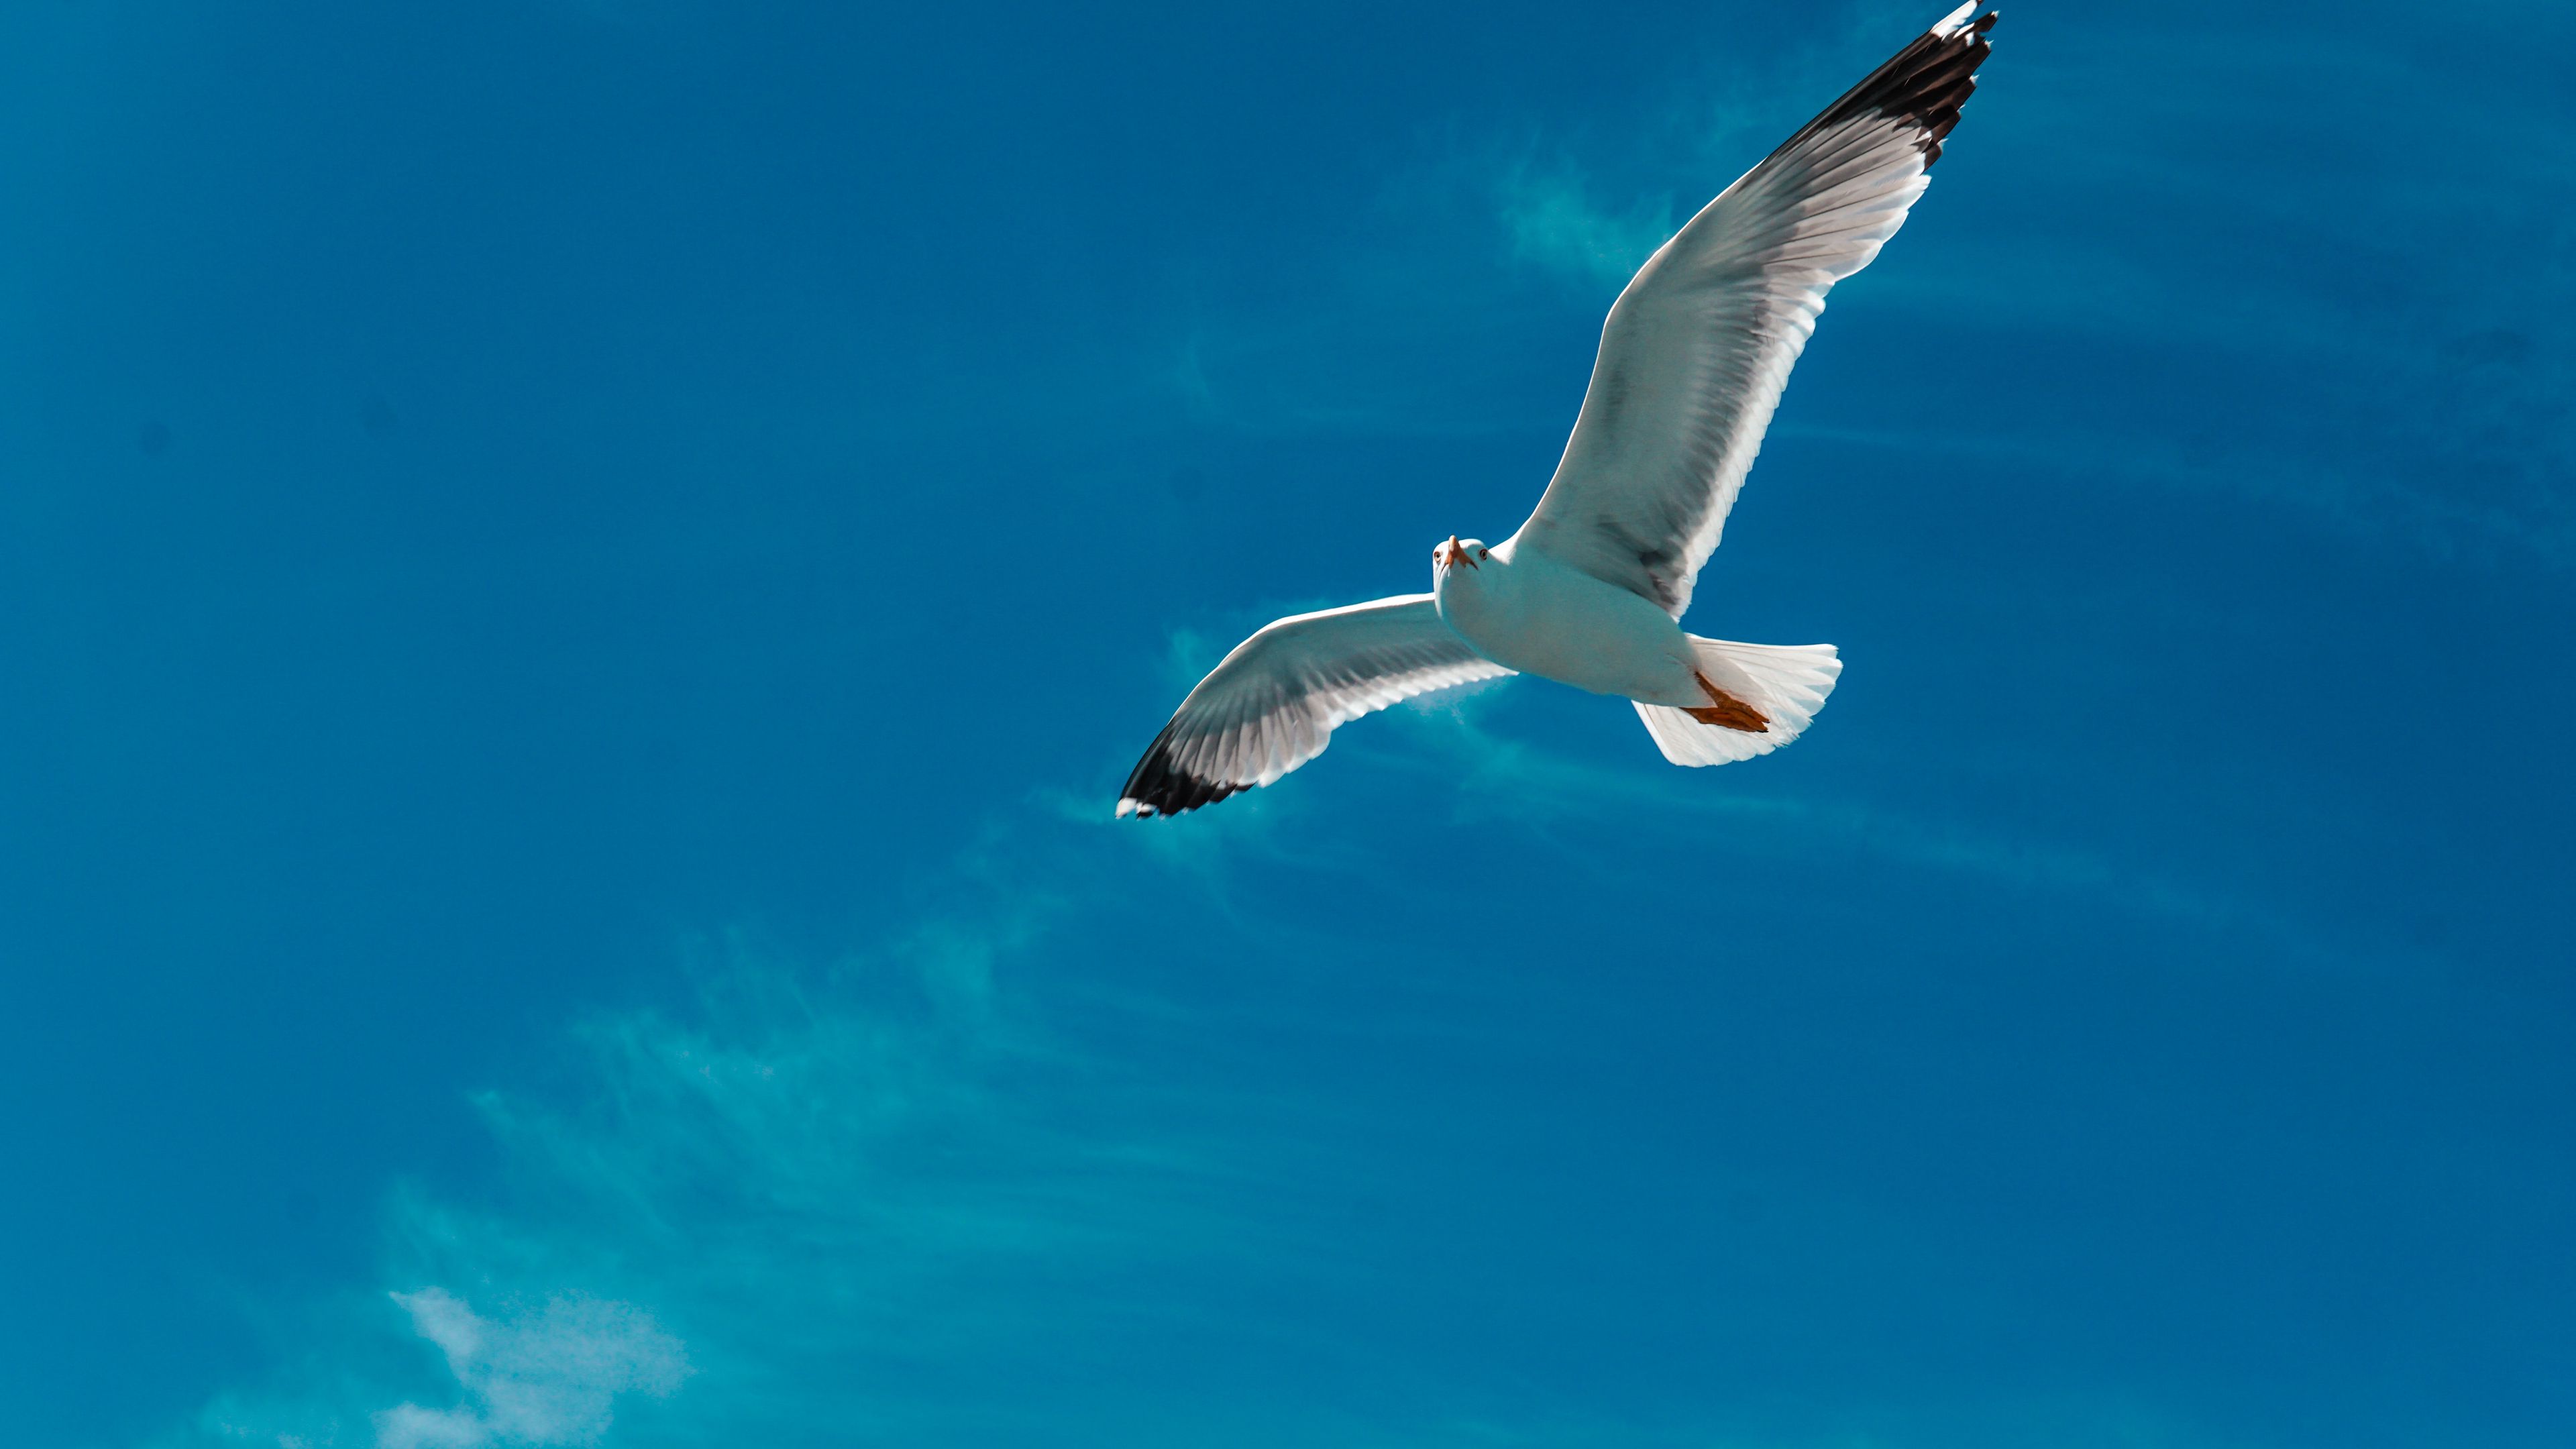 Download wallpaper 3840x2160 seagull, bird, wings, flight, sky, clouds 4k  uhd 16:9 hd background